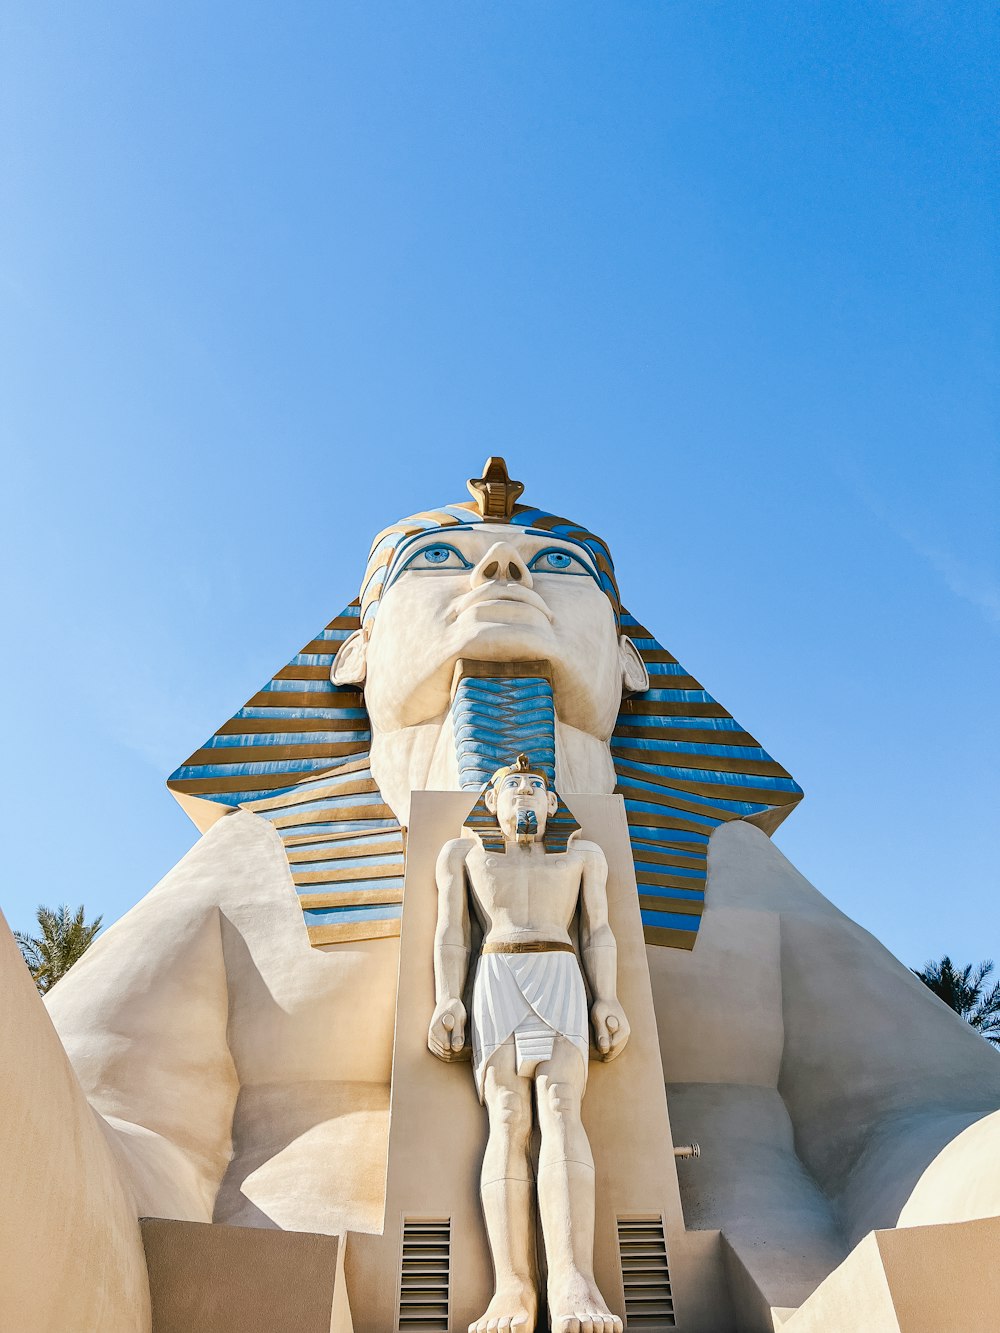 Una estatua de un dios egipcio frente a un edificio